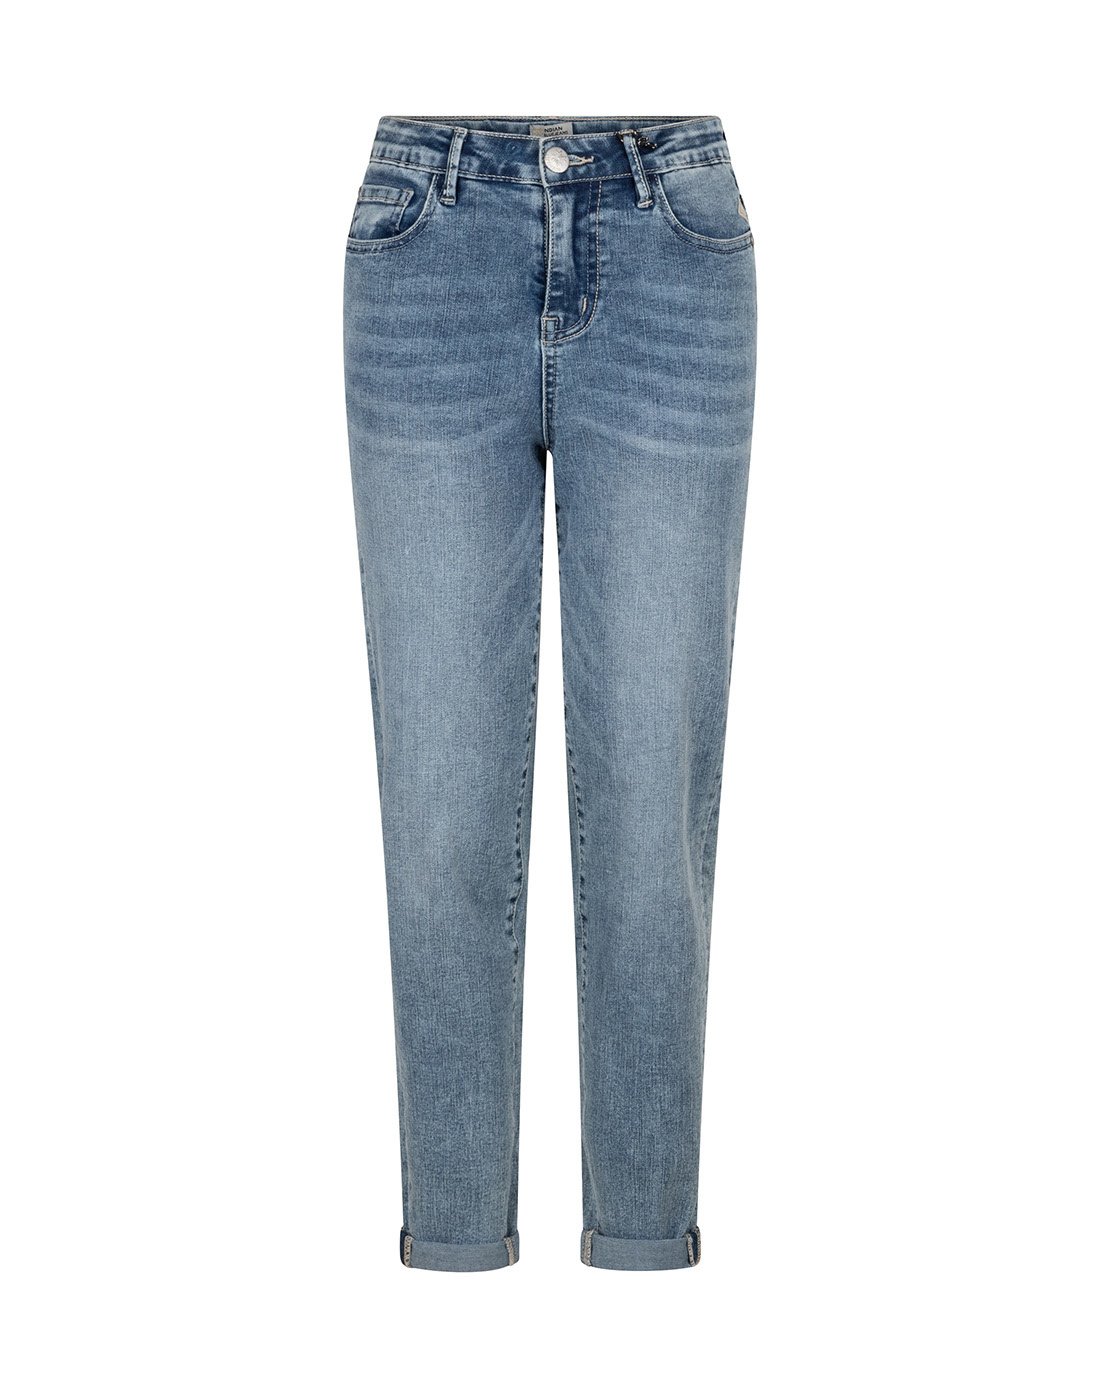 Indian Blue Jeans Meisjes jeans broek mae - mom fit - Medium